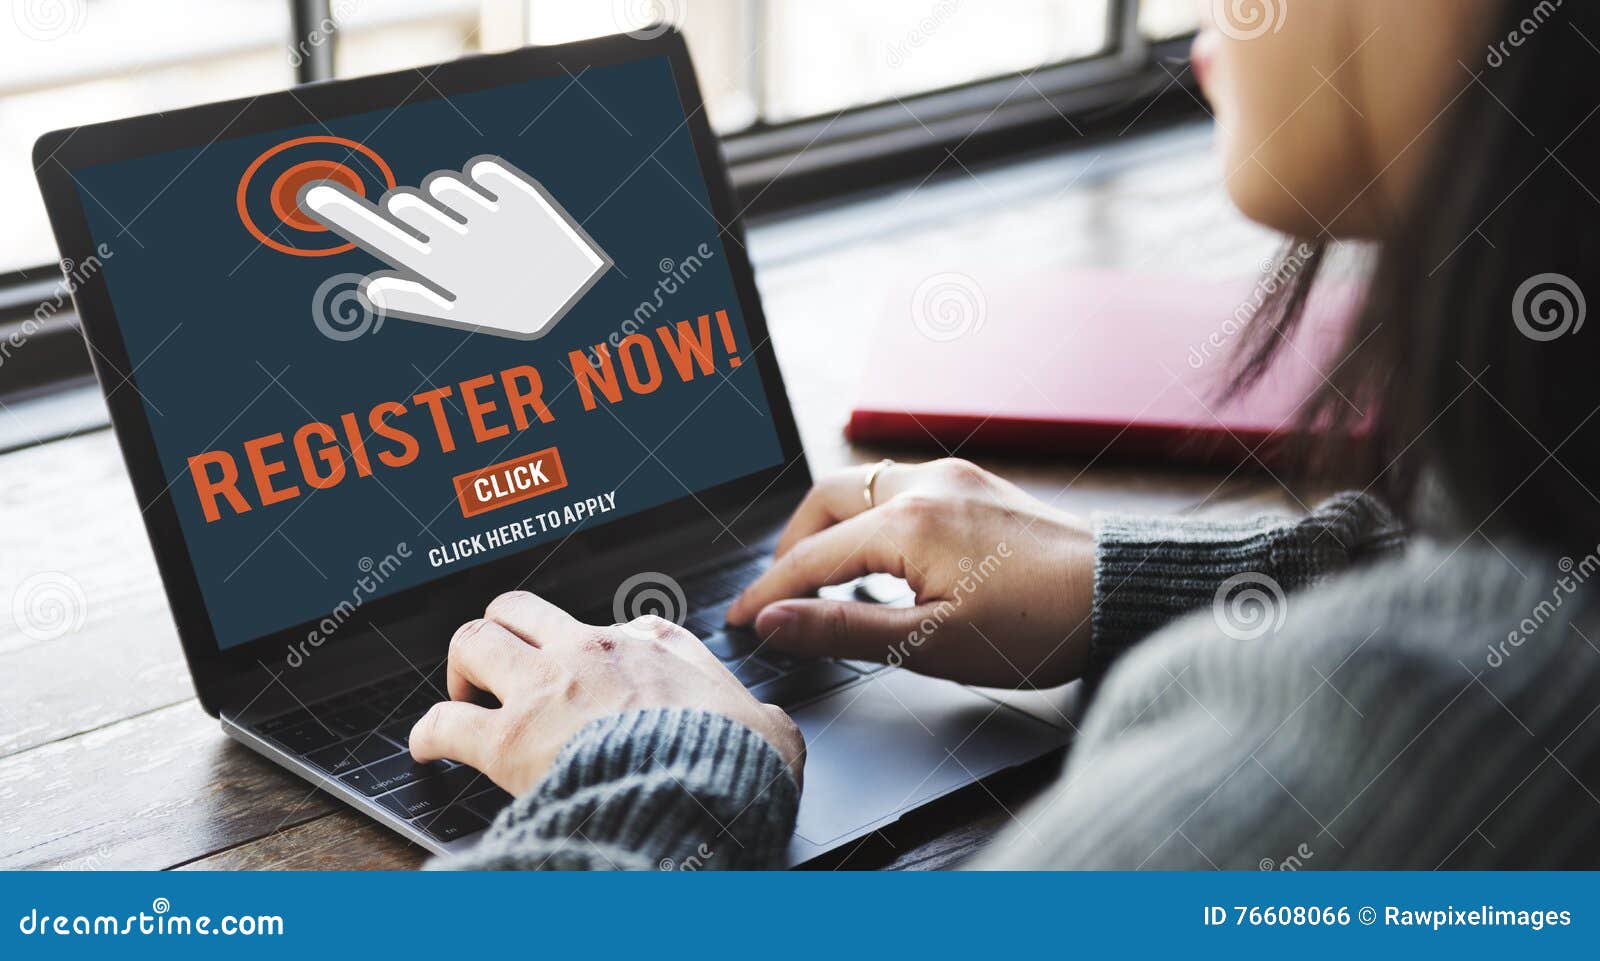 register registration enter apply membership concept